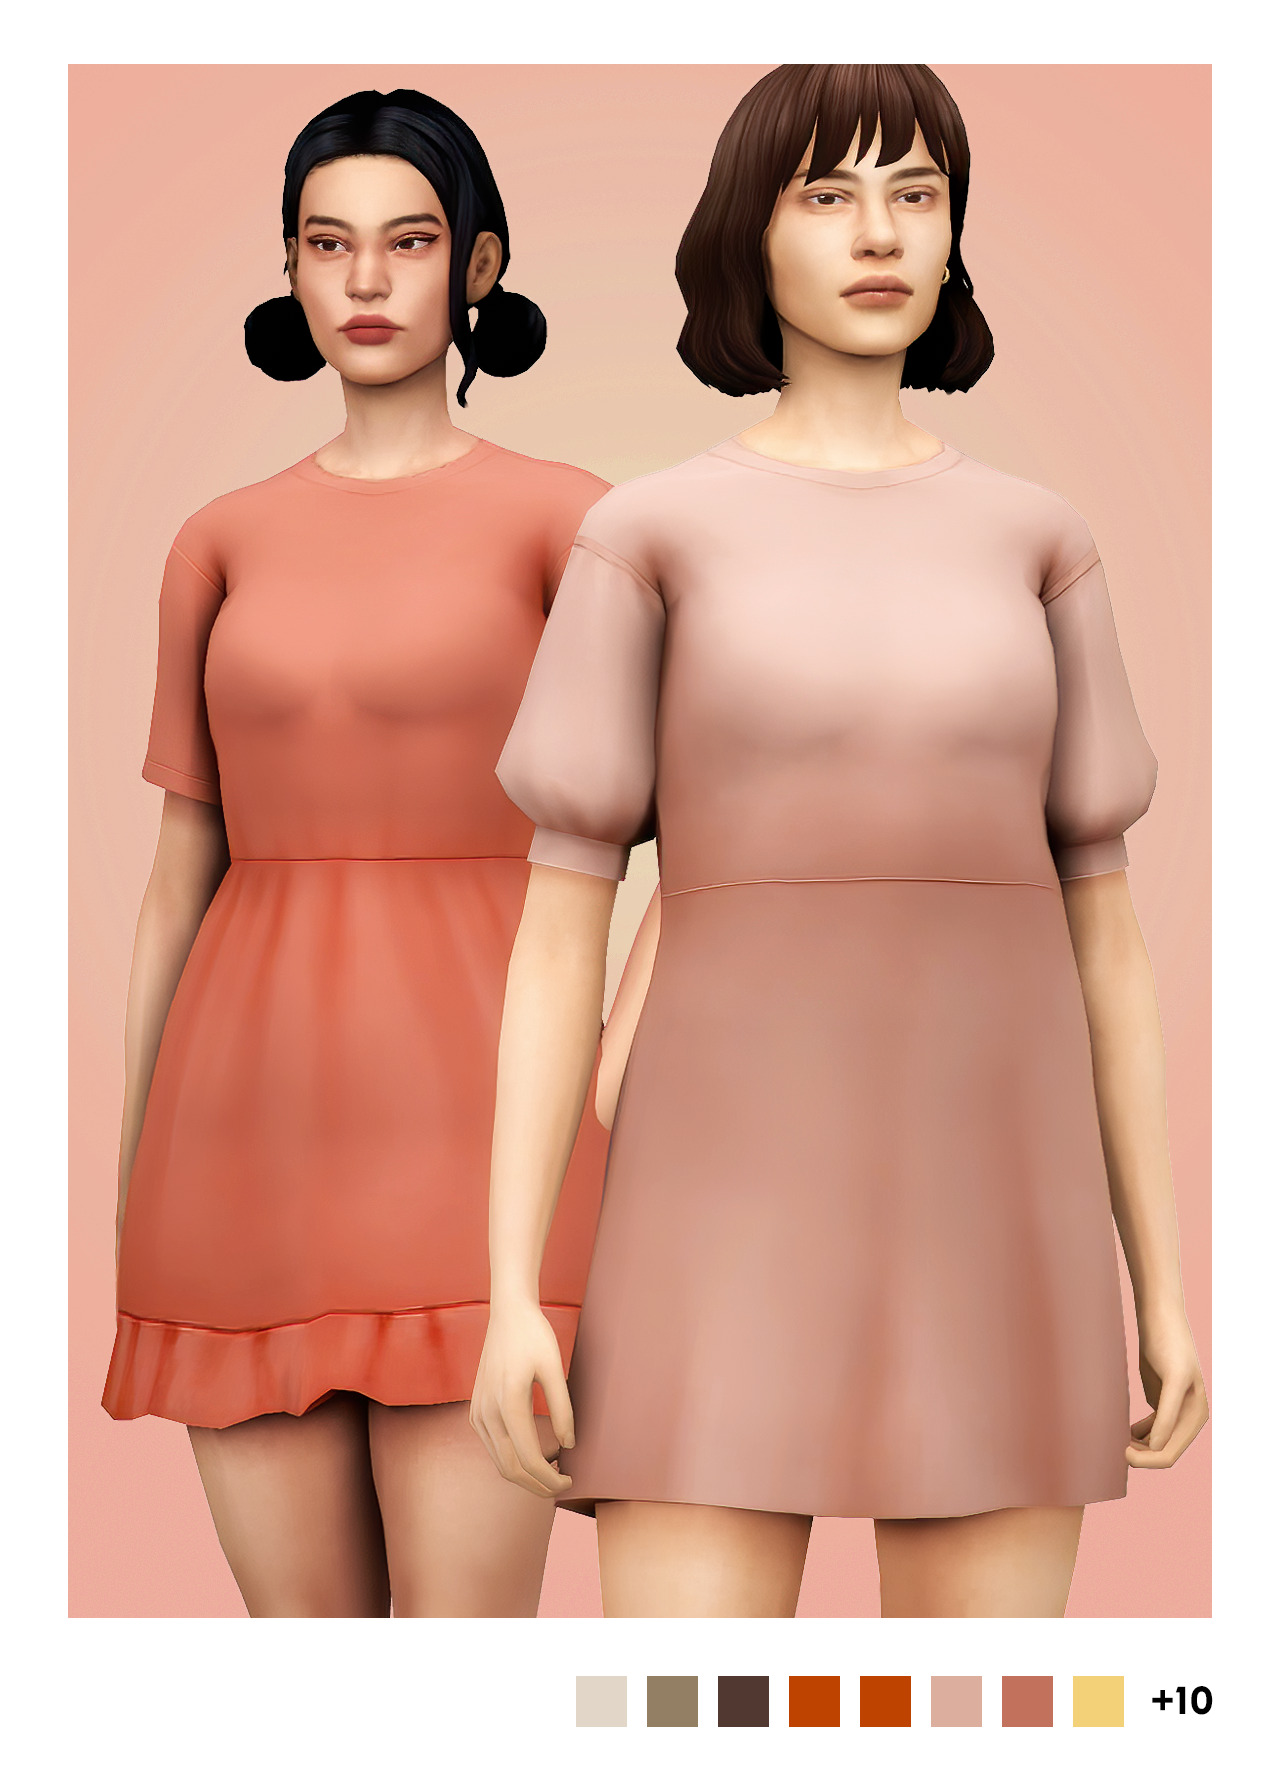 Sims 4 Maxis Match Clothes Cc Sims 4 Maxis Match Clothes Cc - Margaret Wiegel™. Jul 2023